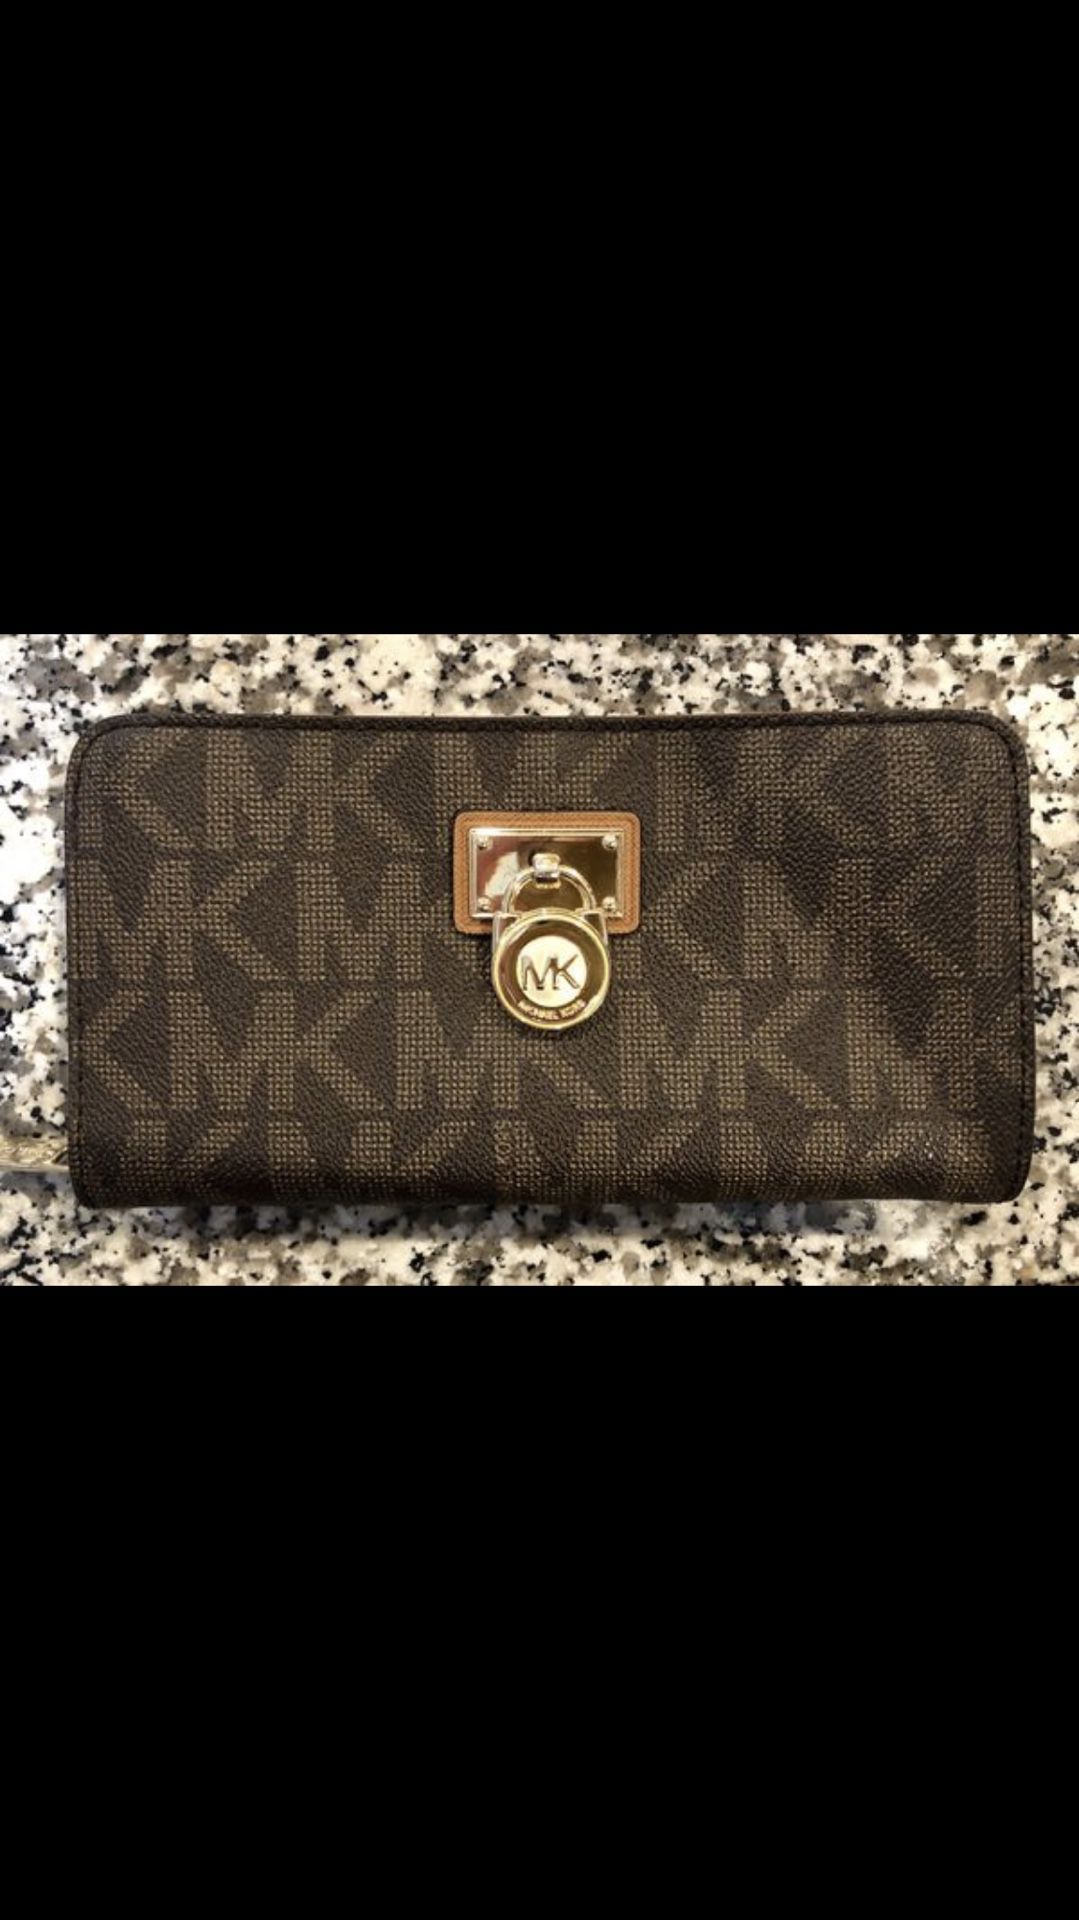 authentic wallet mk